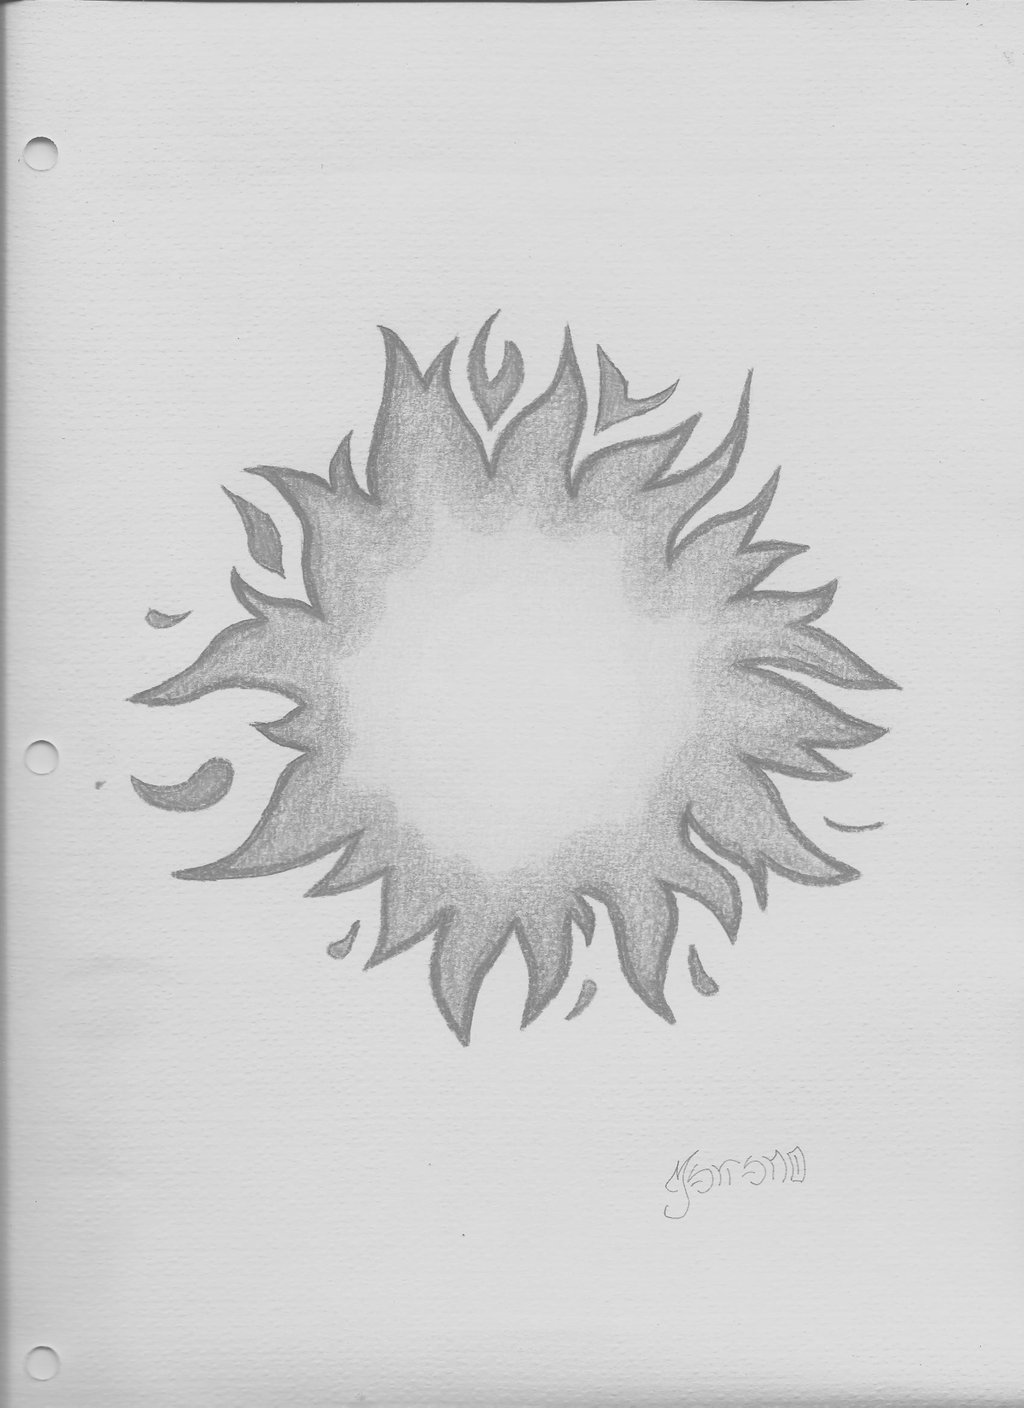 Sun Pencil Drawing - Gallery